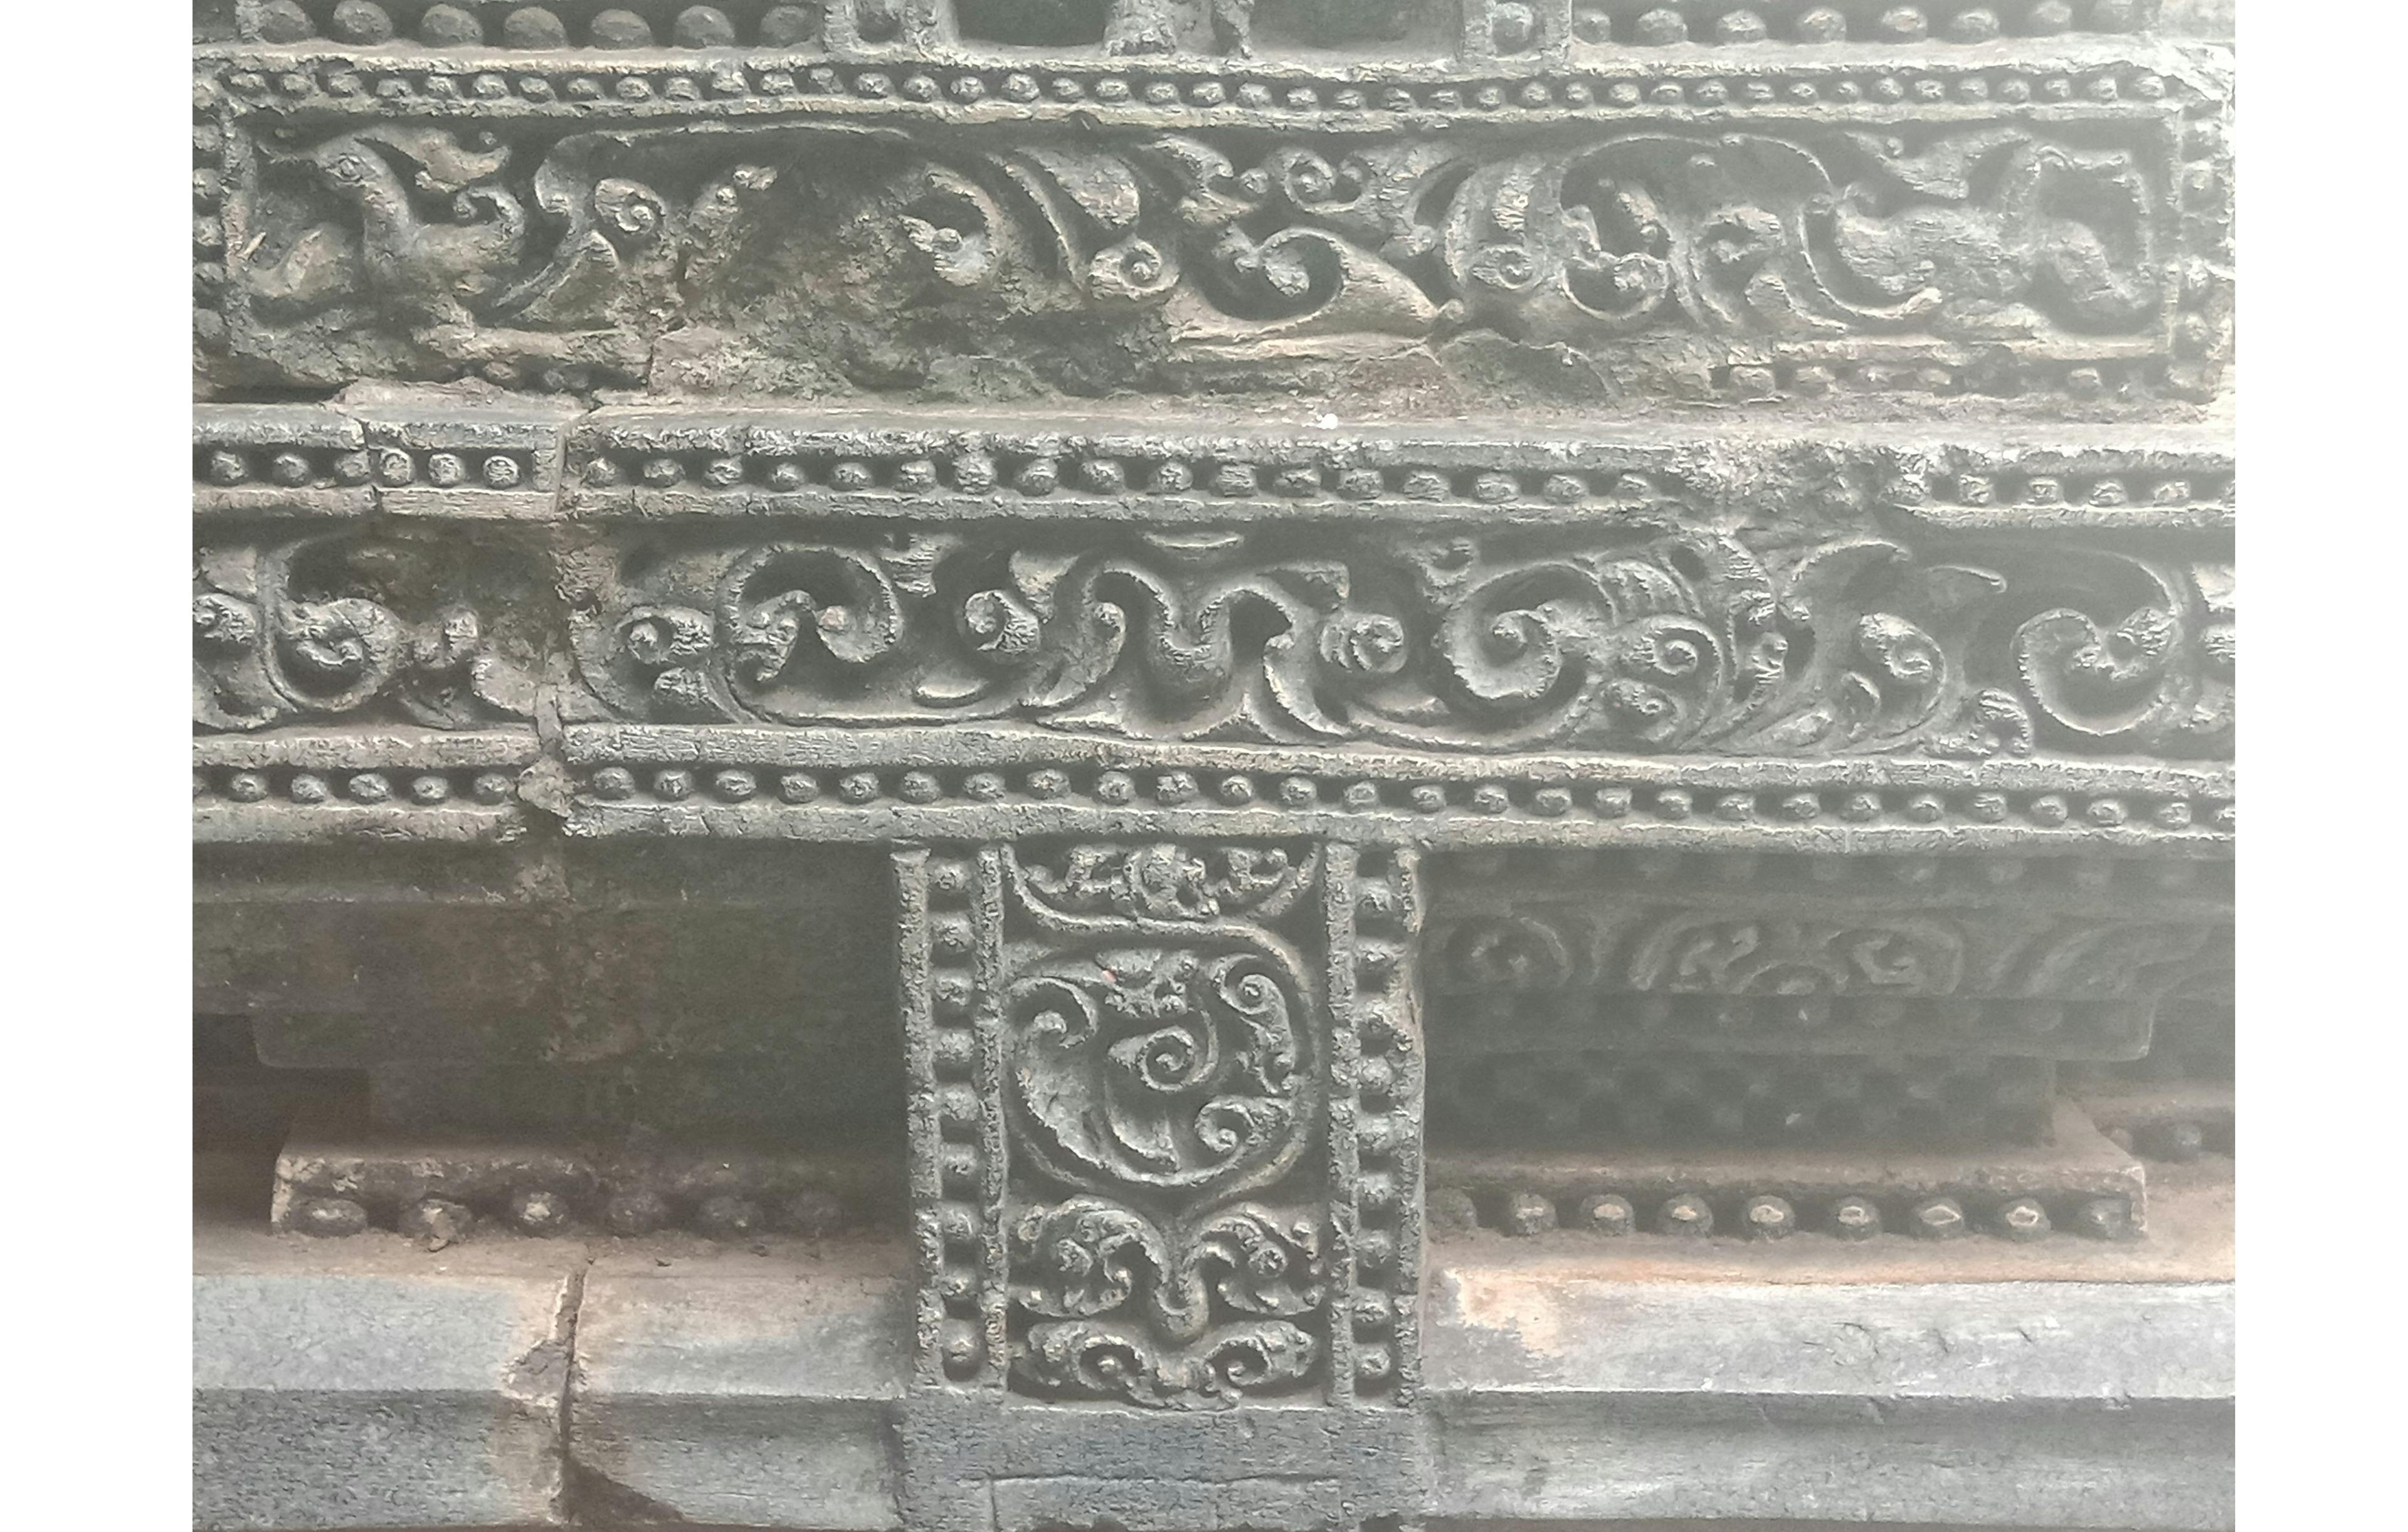 Stone carving at the Kichakeshwari Temple